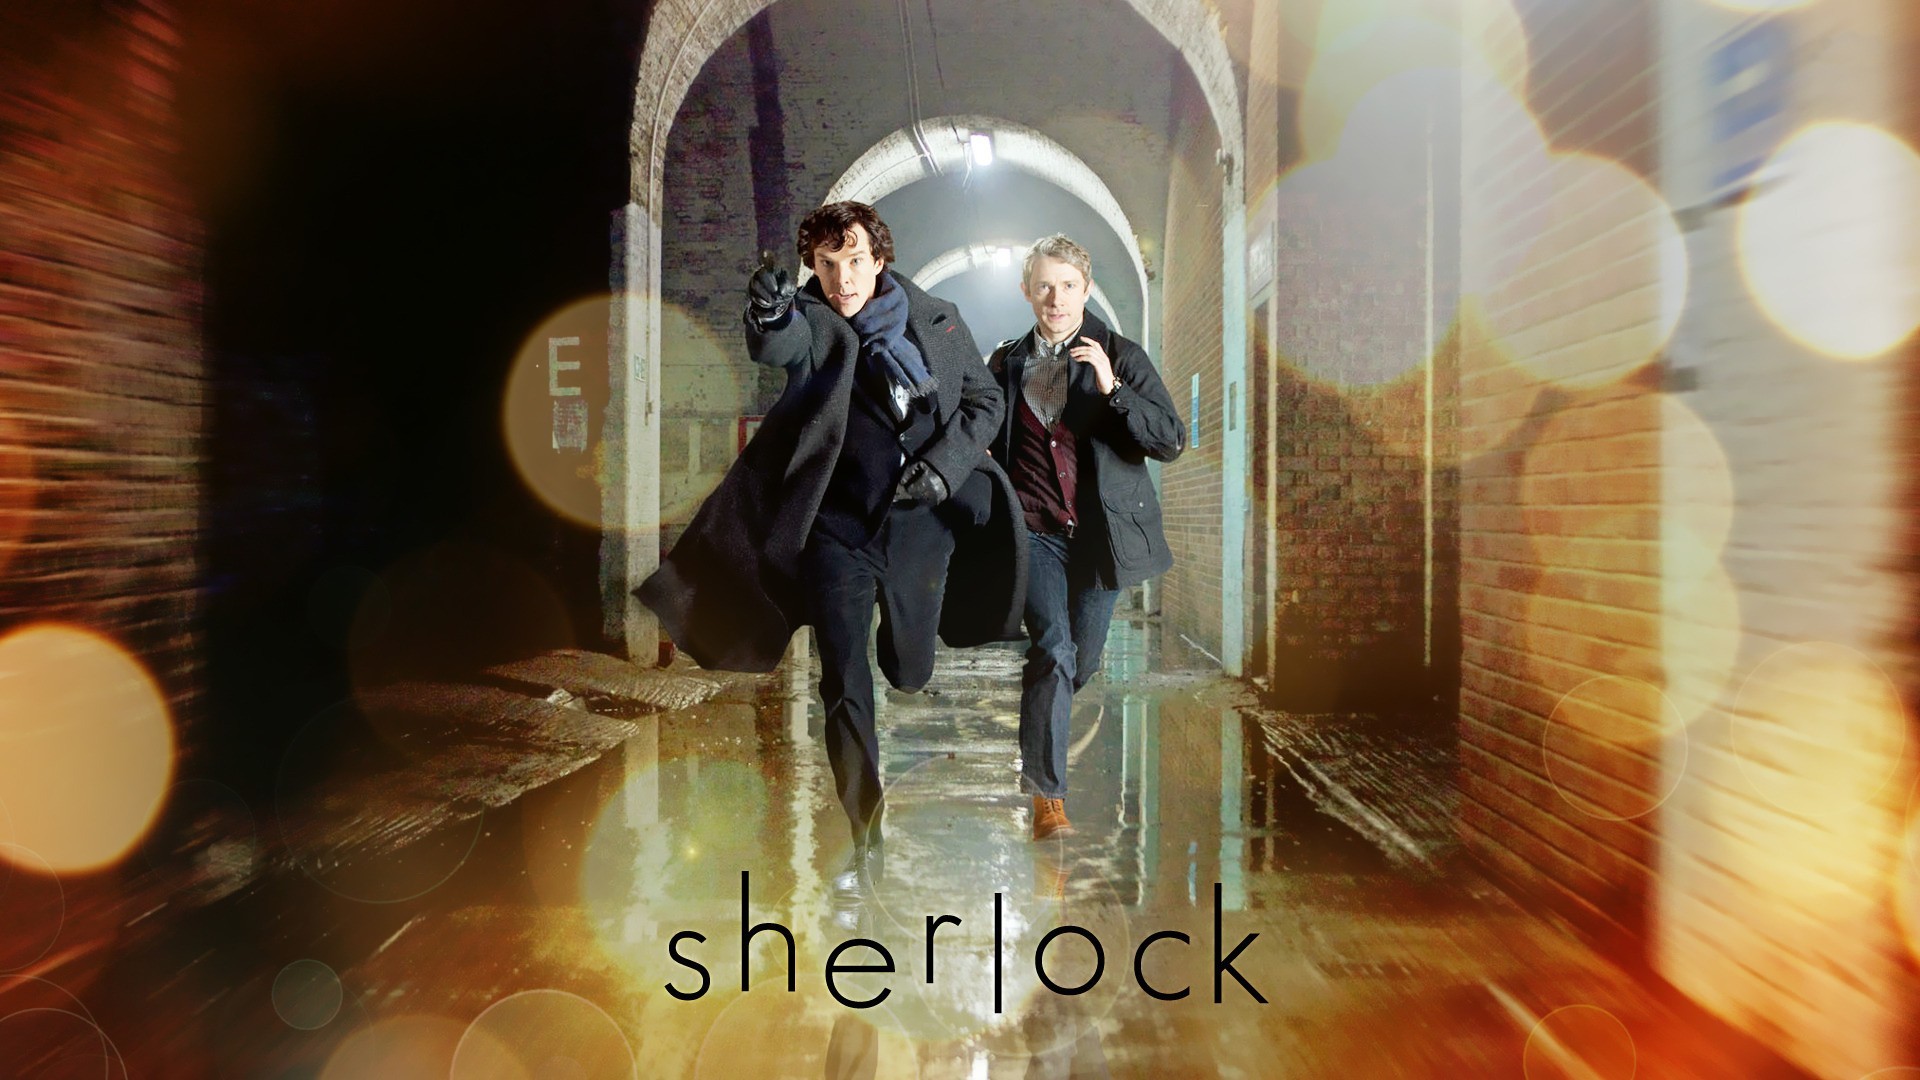 1920x1080 Sherlock Full HD Wallpaper 